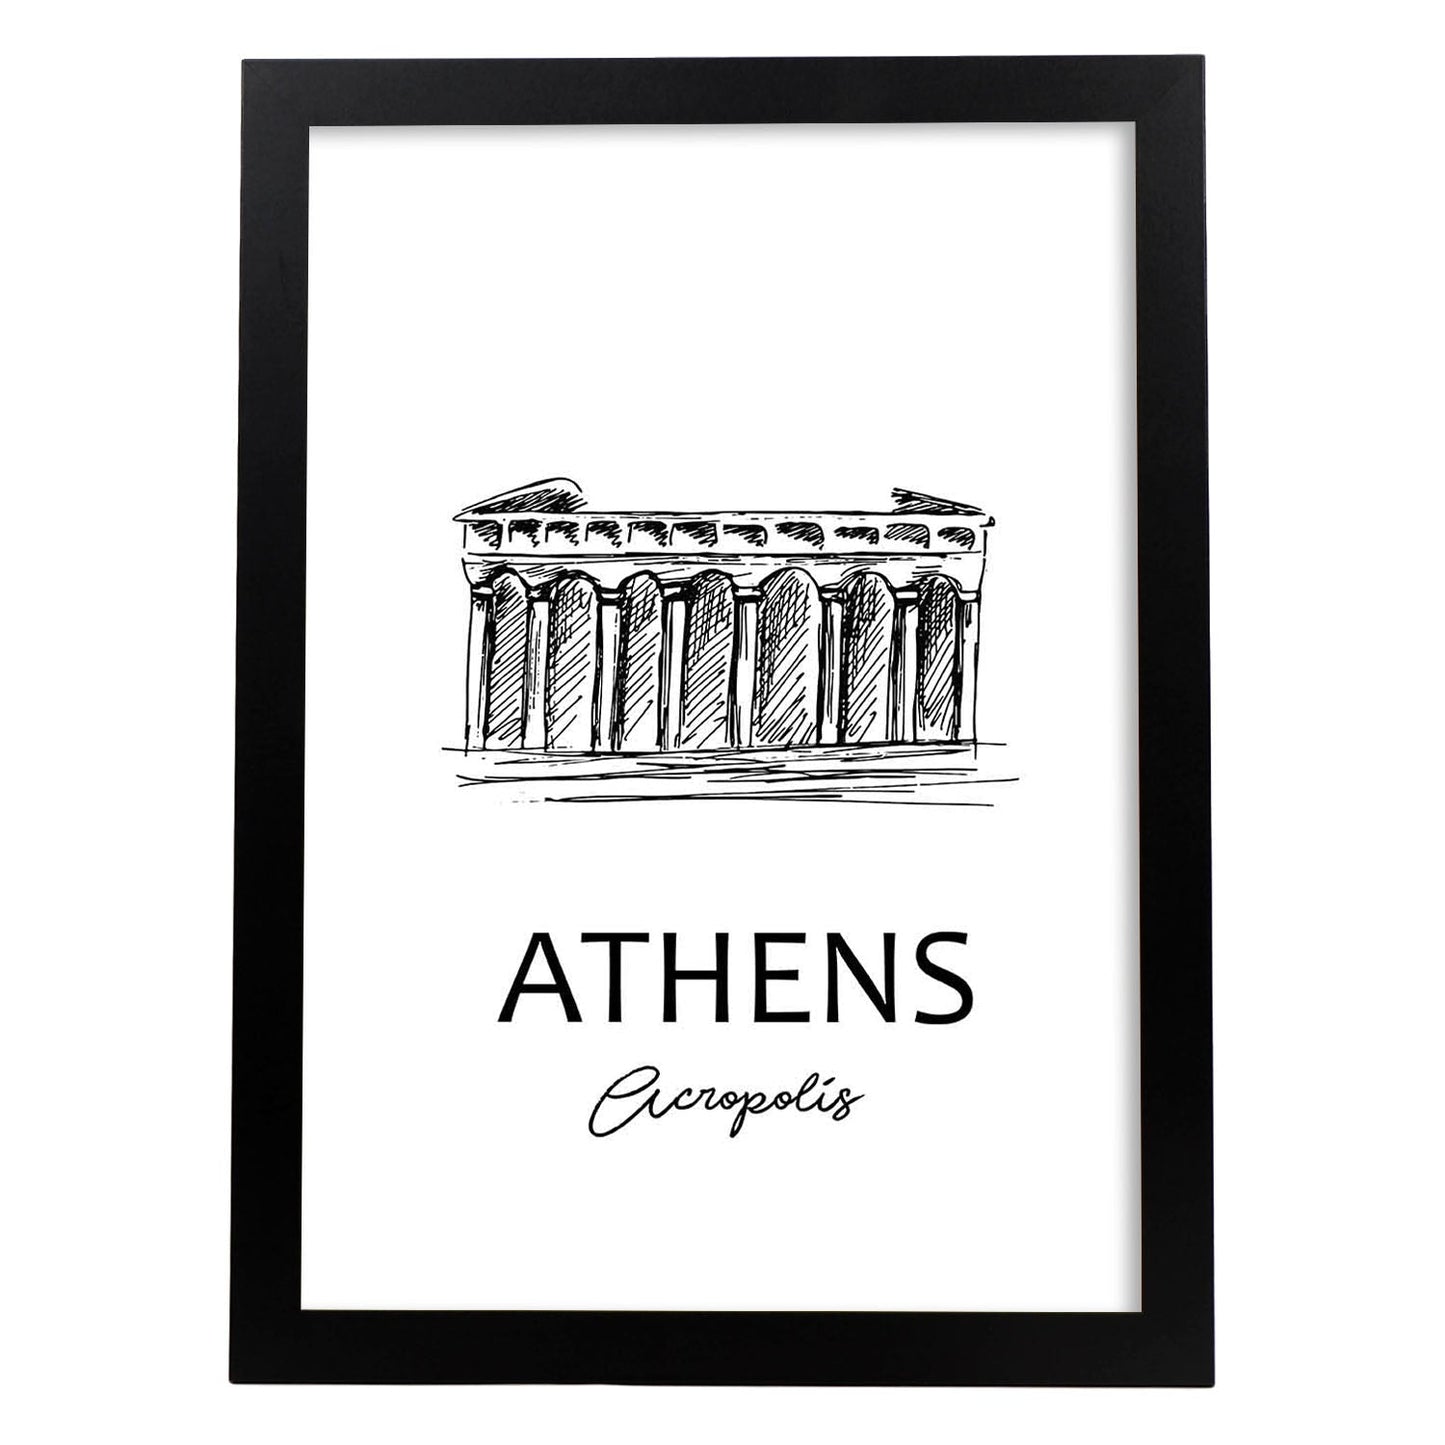 Poster de Atenas - Acropolis. Láminas con monumentos de ciudades.-Artwork-Nacnic-A4-Marco Negro-Nacnic Estudio SL